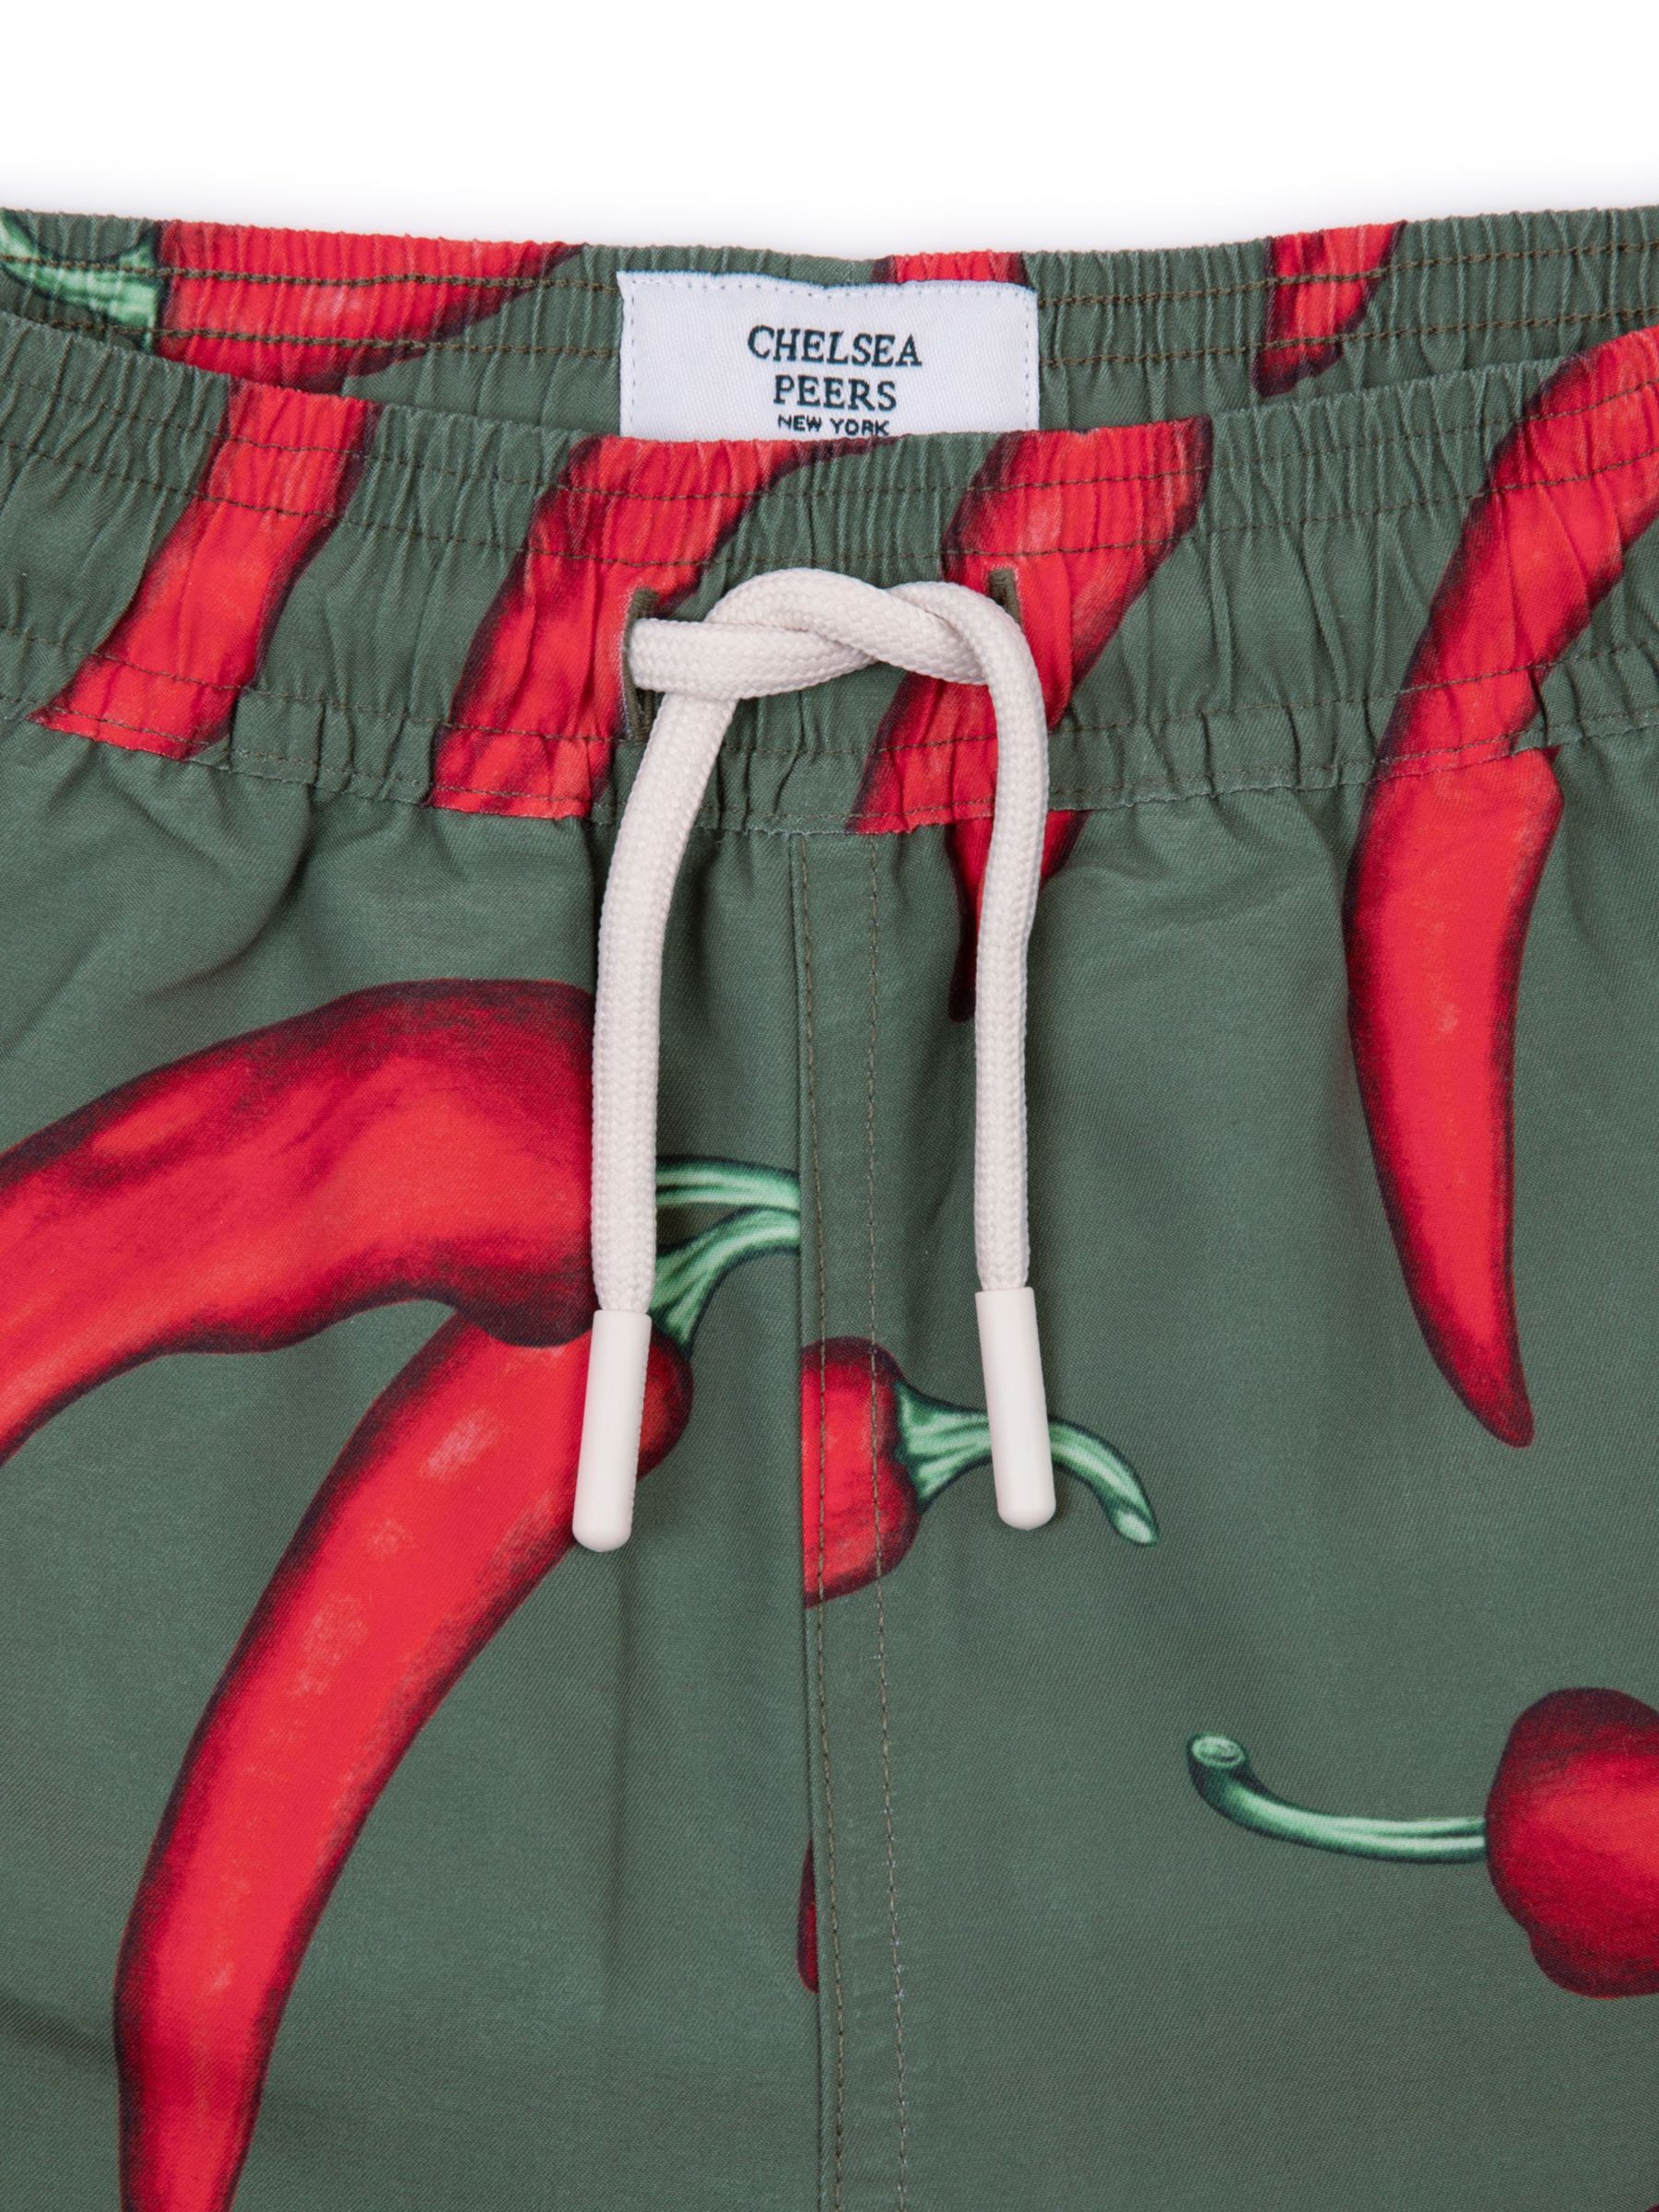 Chelsea Peers Kids' Chilli Pepper Print Swim Shorts, Khaki/Red, 1-2 years